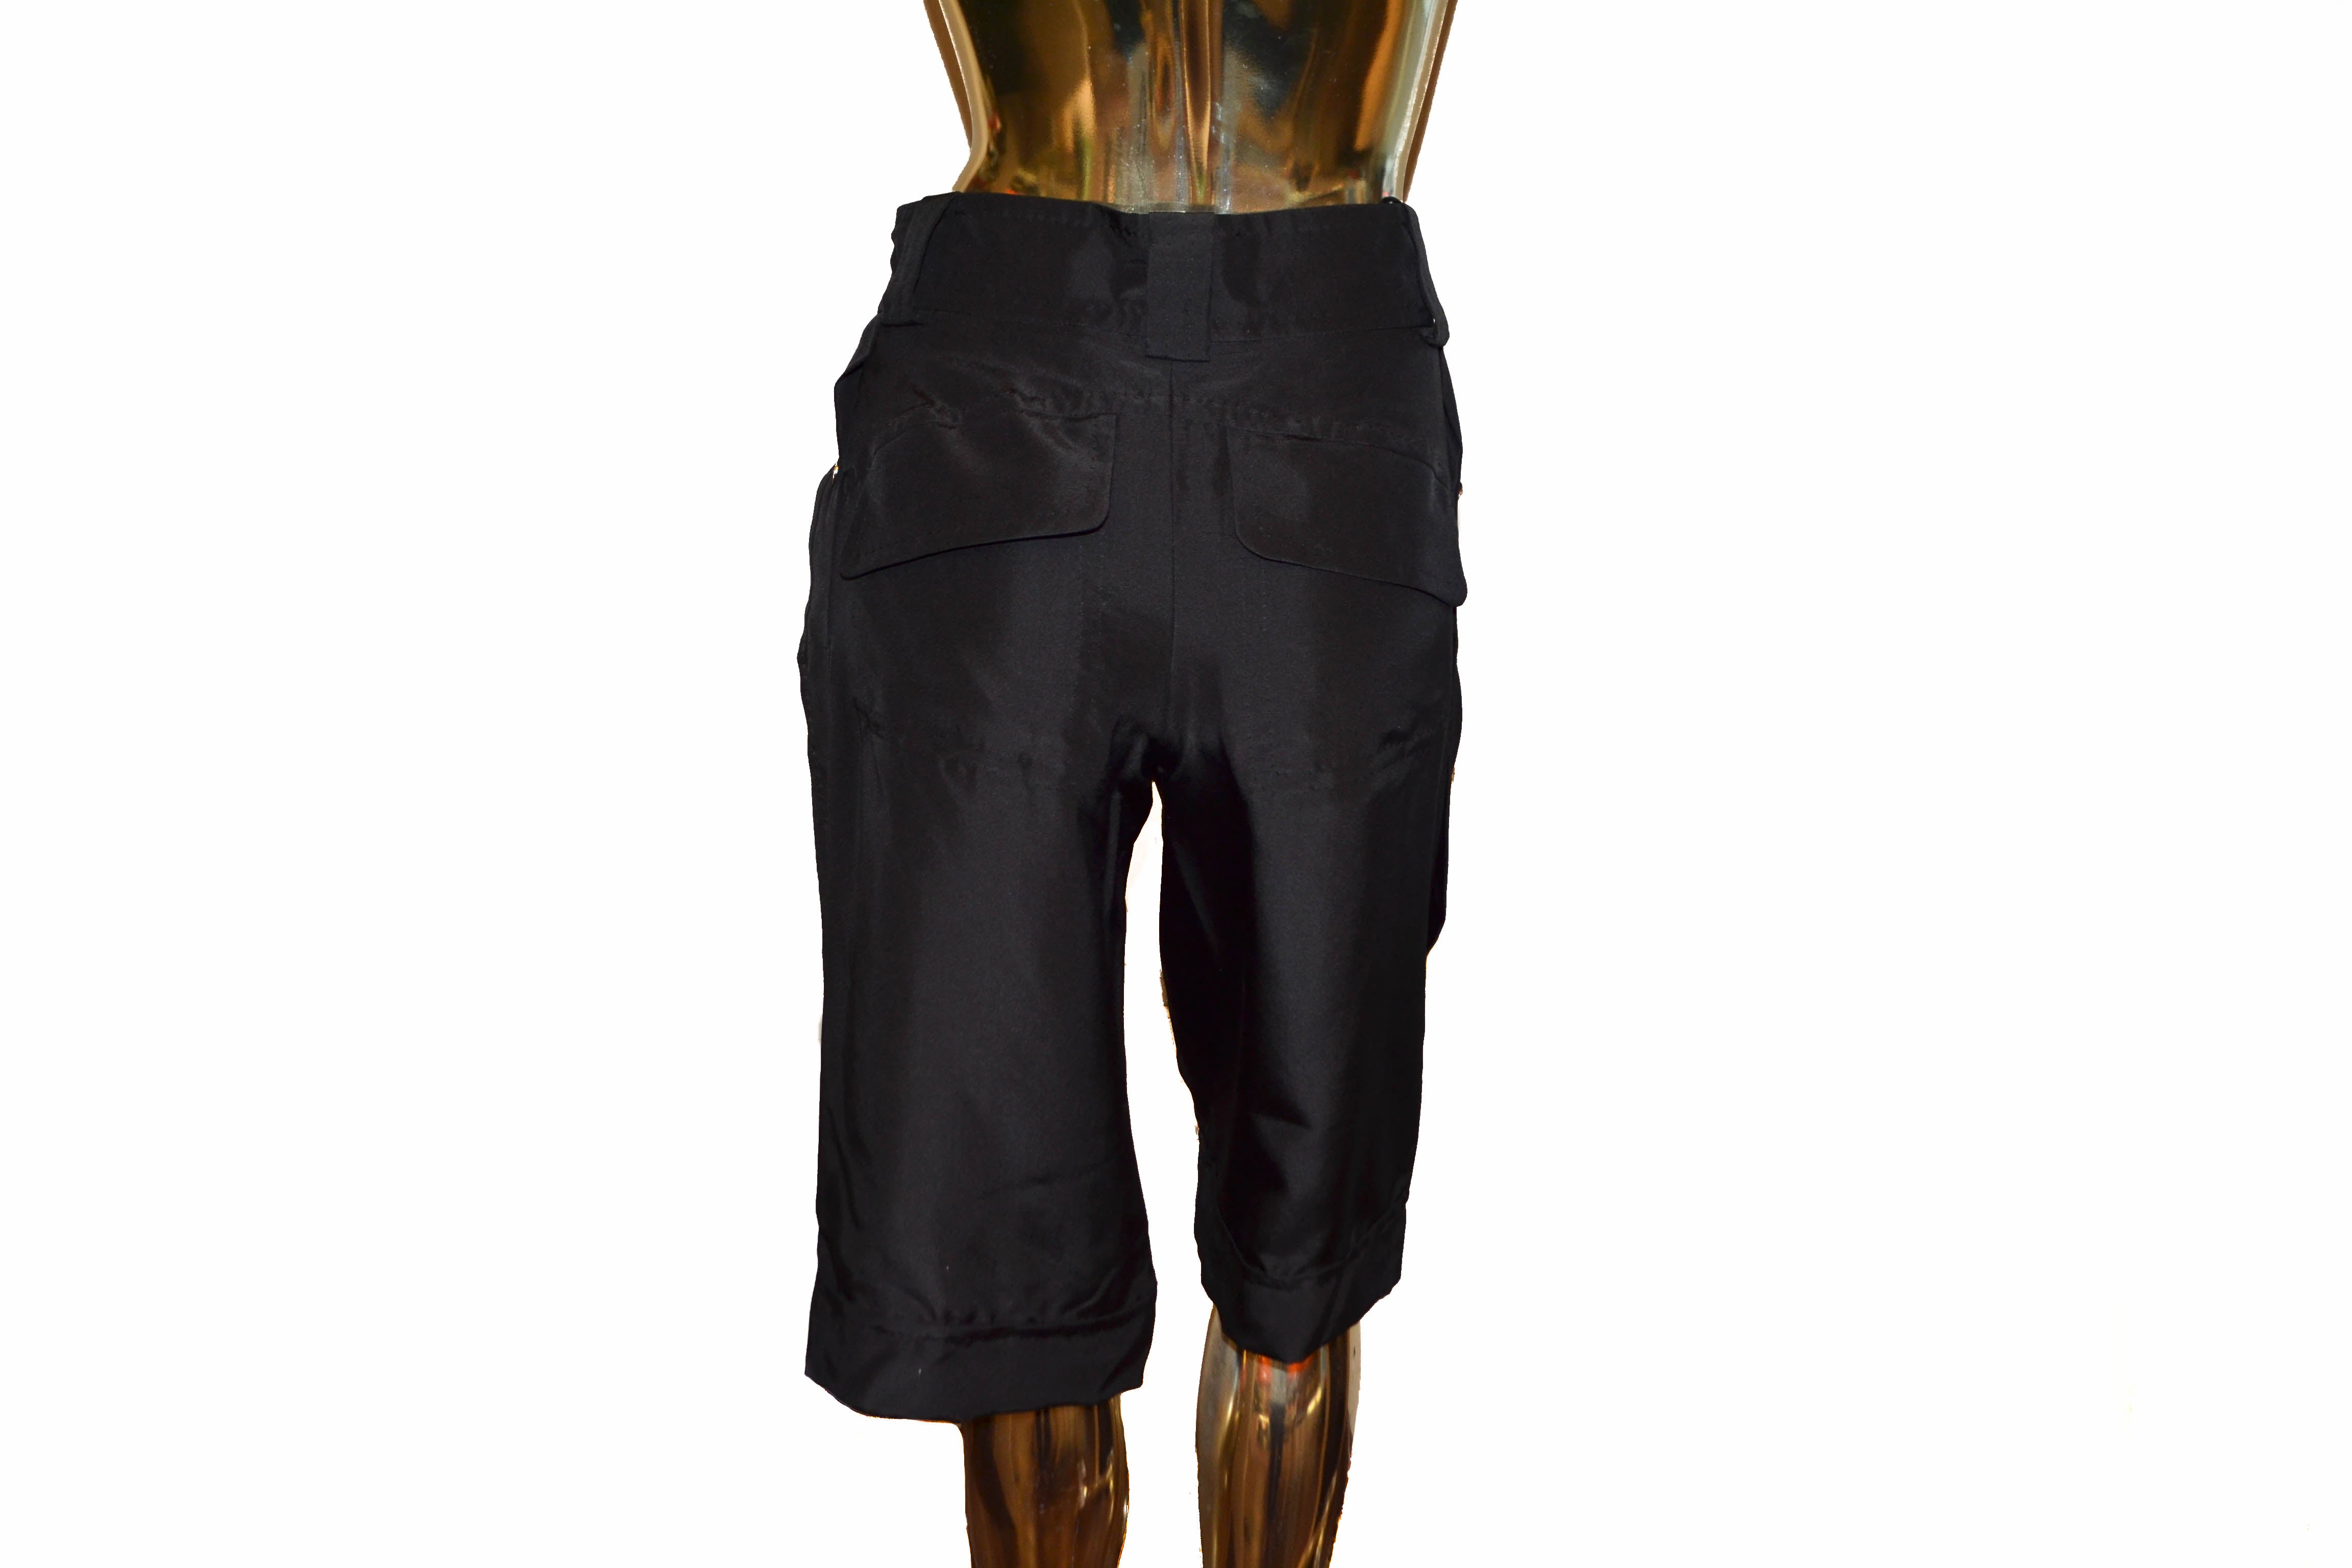 capri pants brand: ivivva size: 12 #pants - Depop